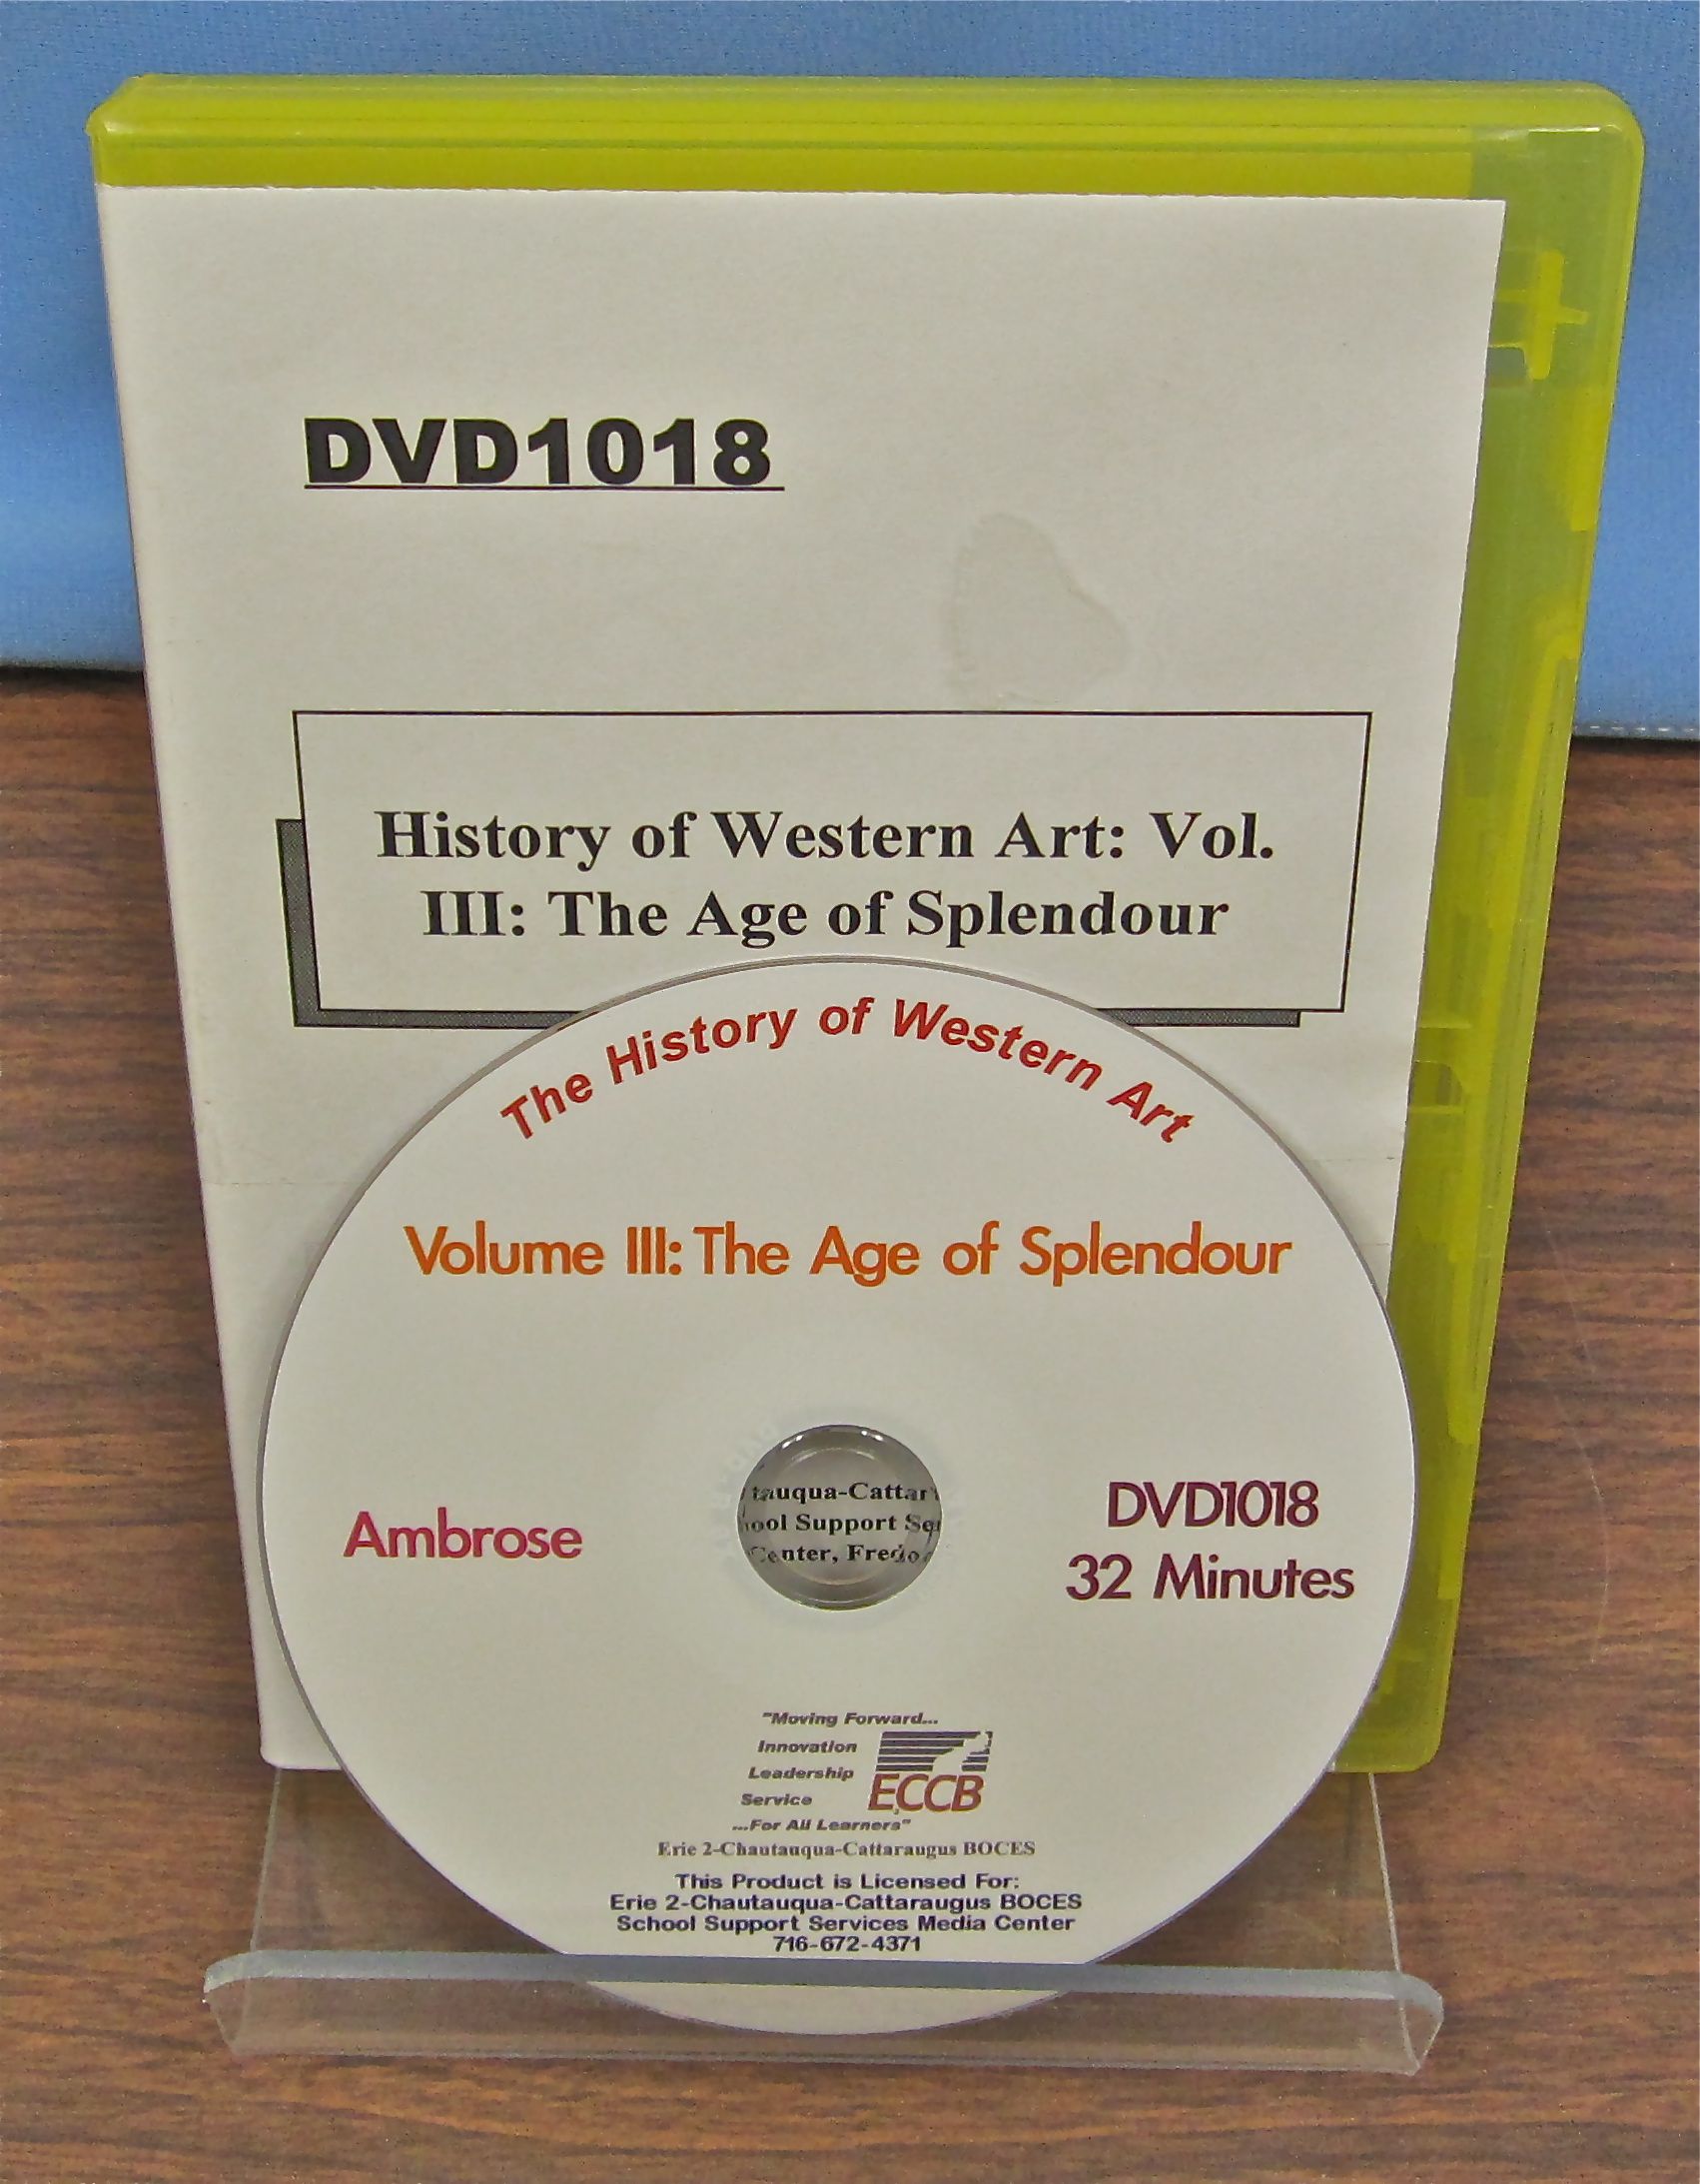 History of Western Art: Vol. III: The Age of Splendour